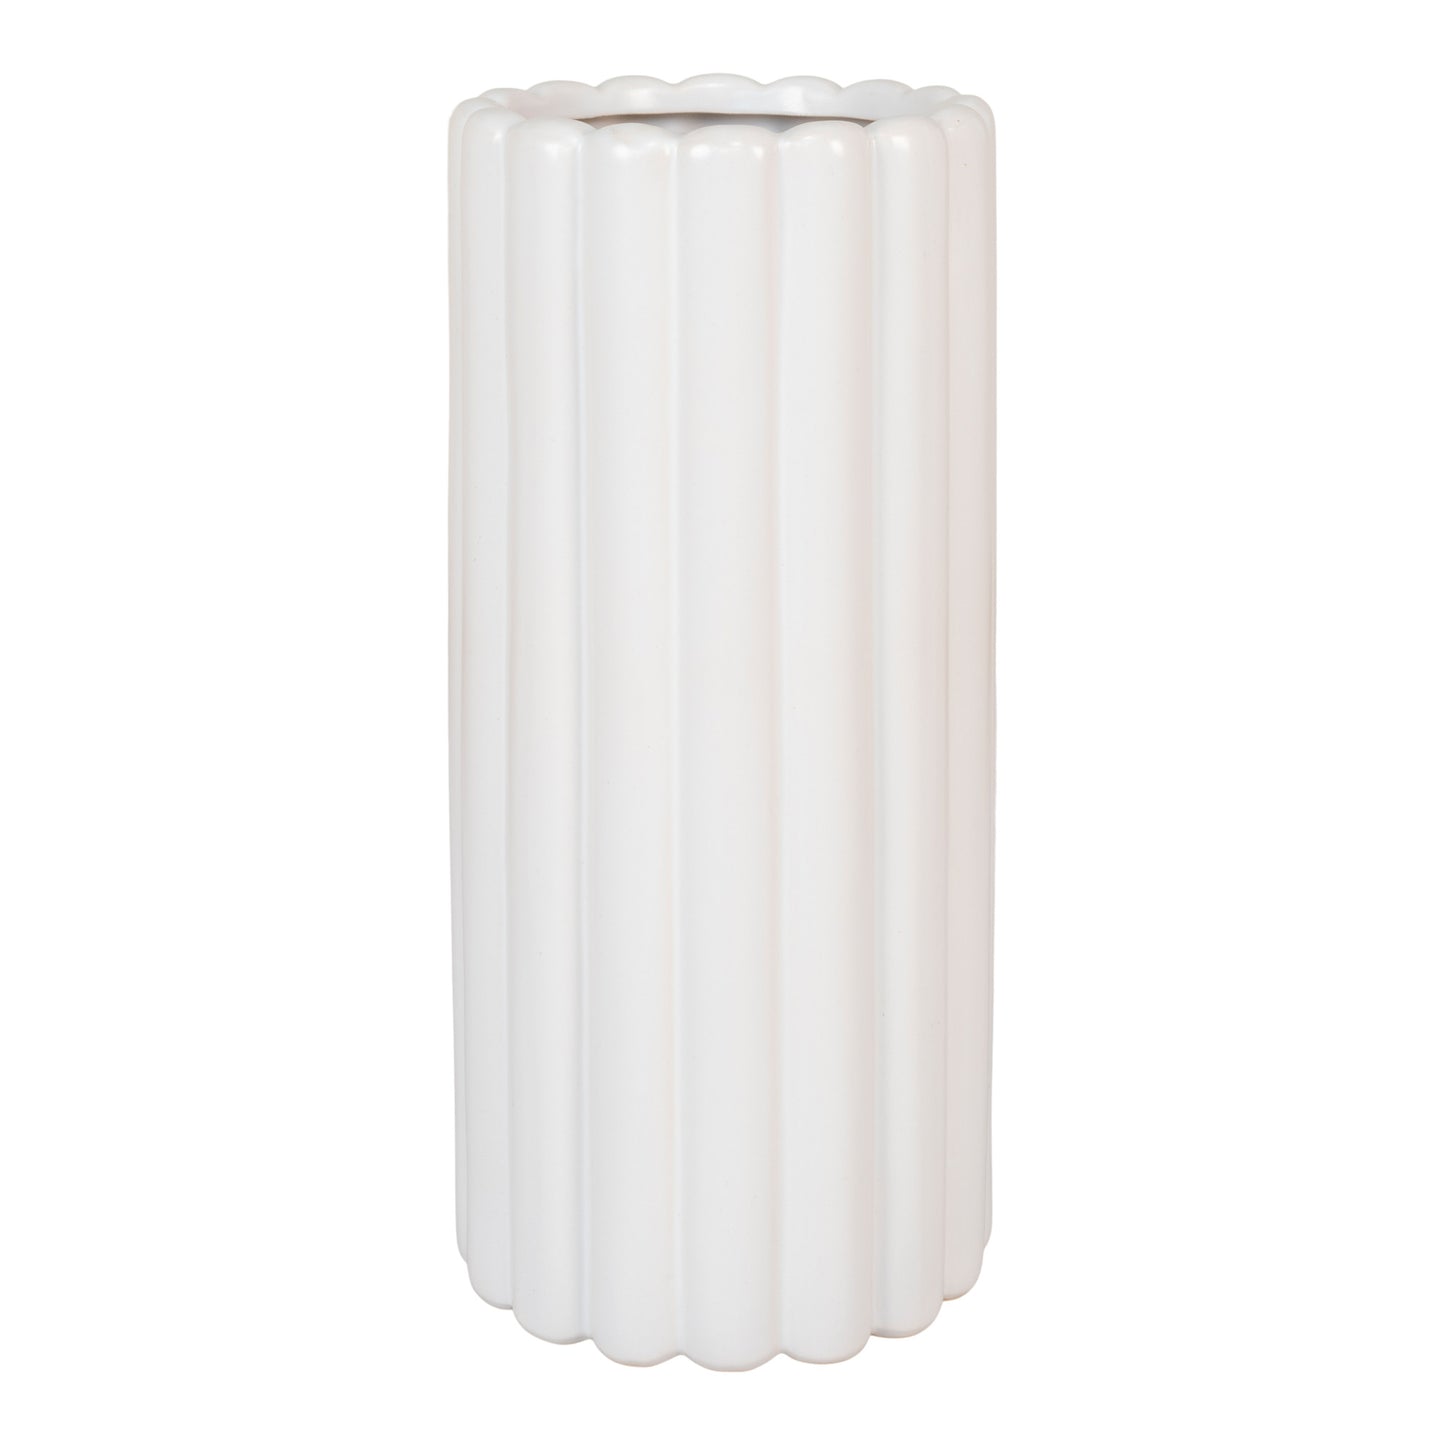 Vase - Vase i keramik, hvid, cylinder, Ø11x25 cm